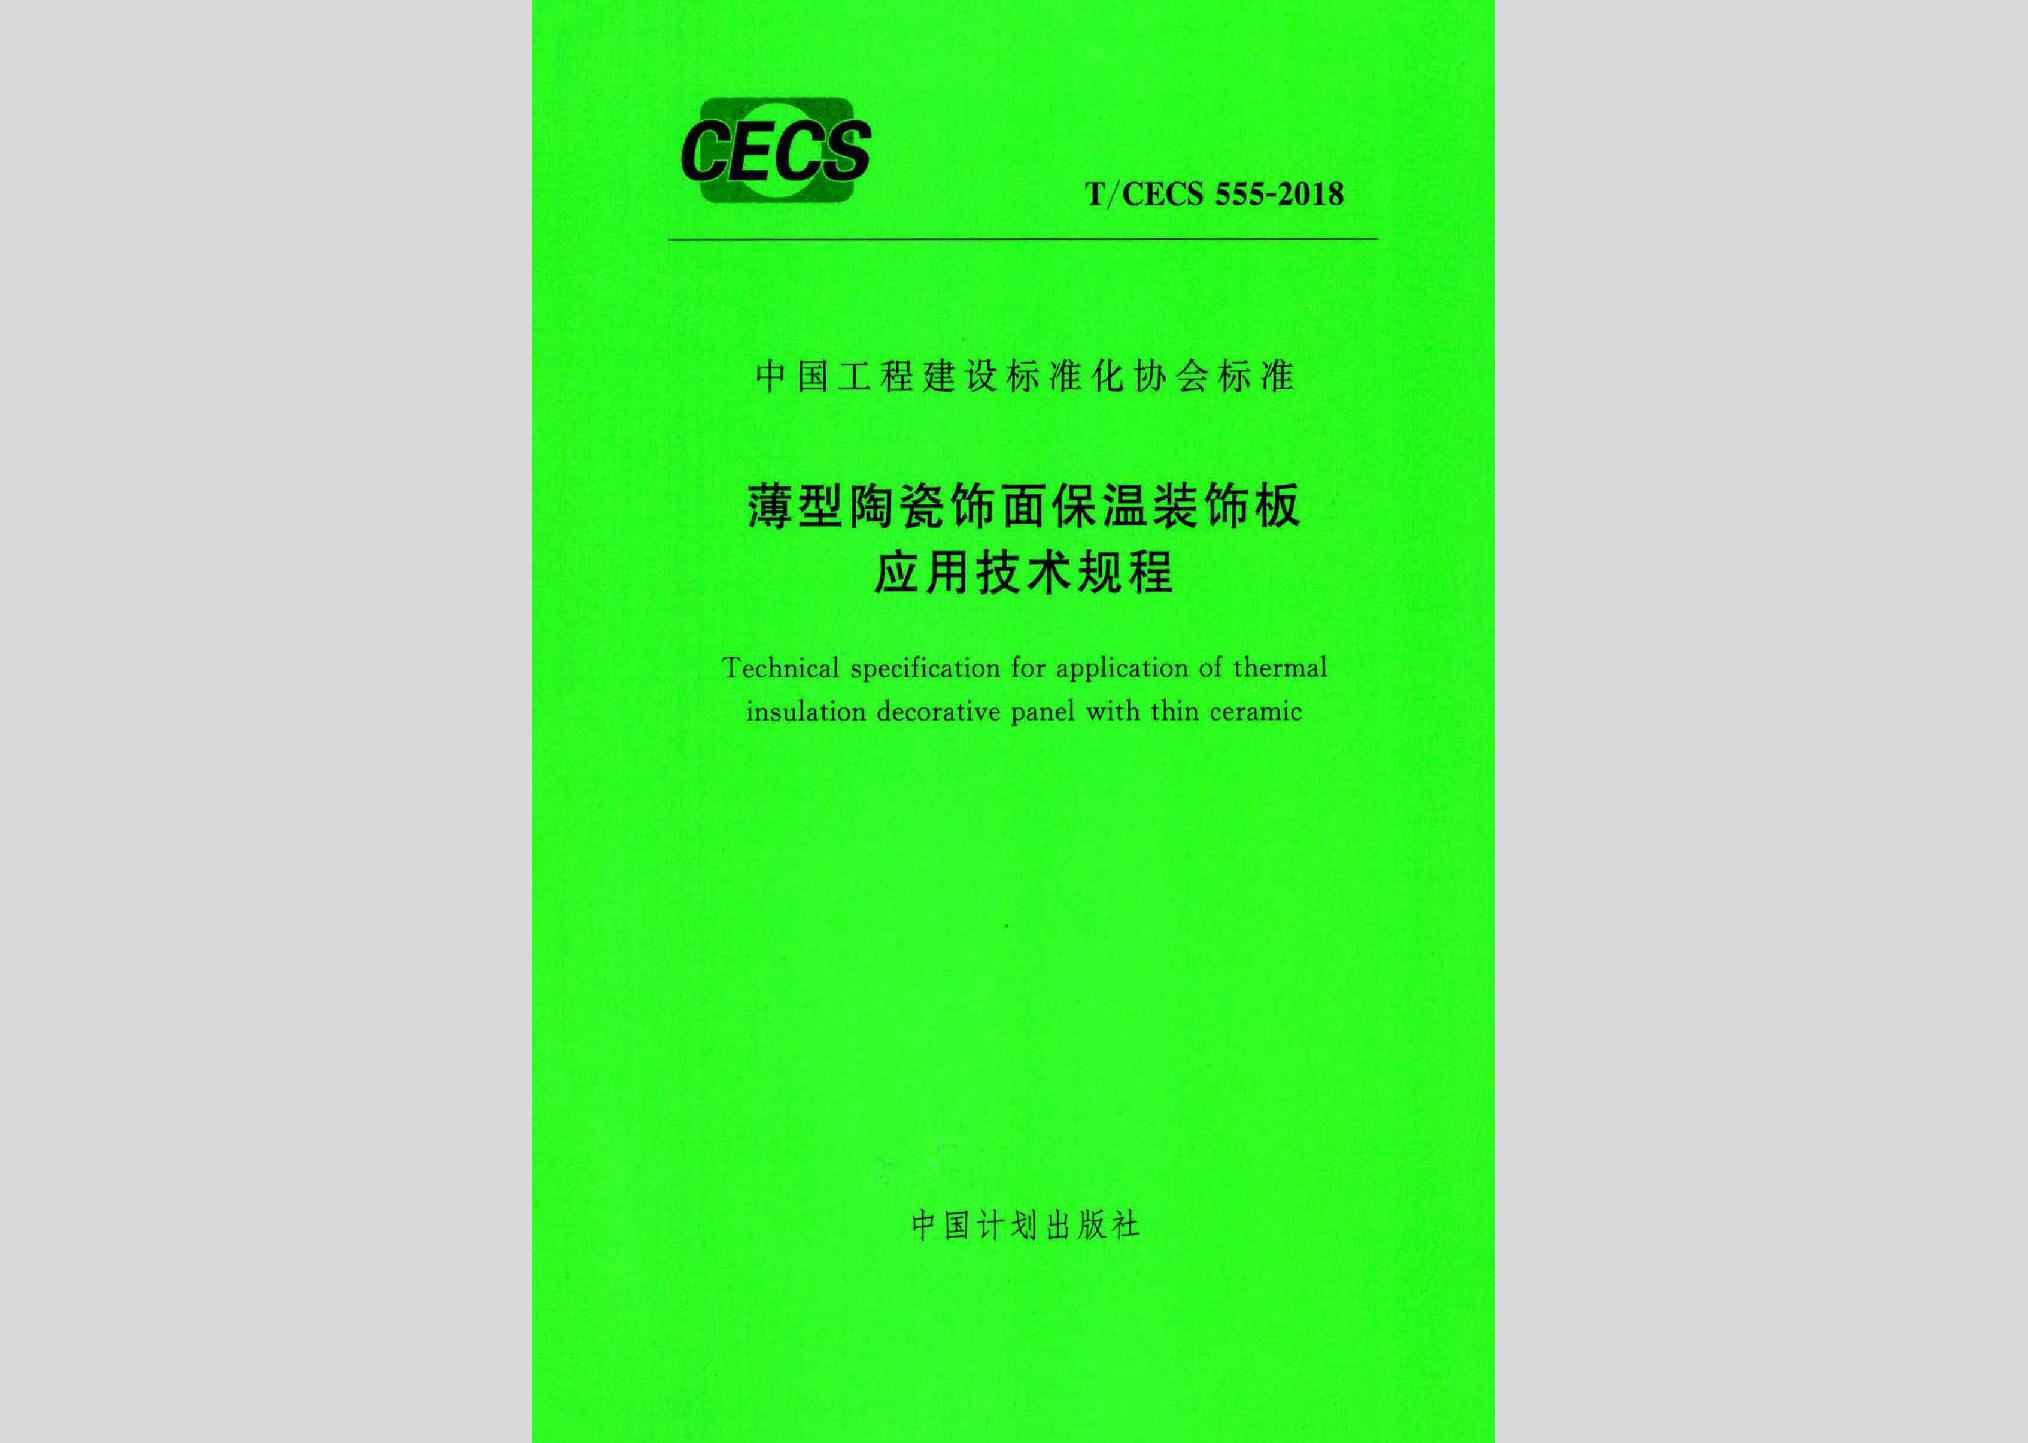 T/CECS555-2018：薄型陶瓷饰面保温装饰板应用技术规程